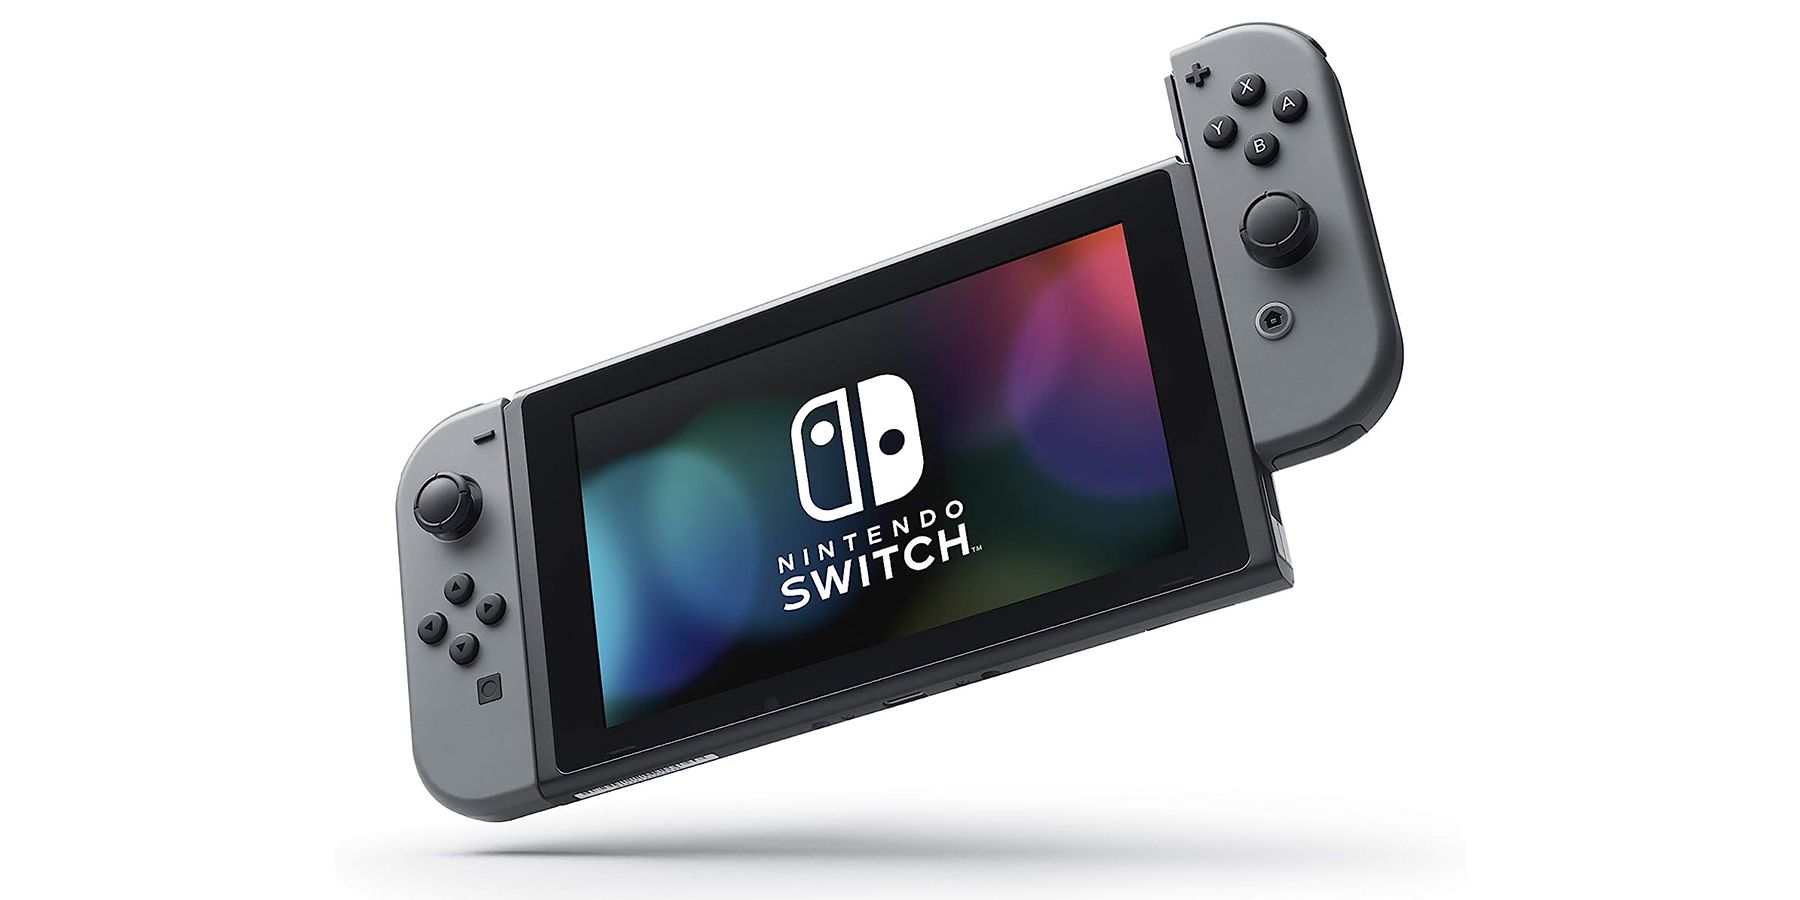 Nintendo Switch with Gray Joy-Cons promo image